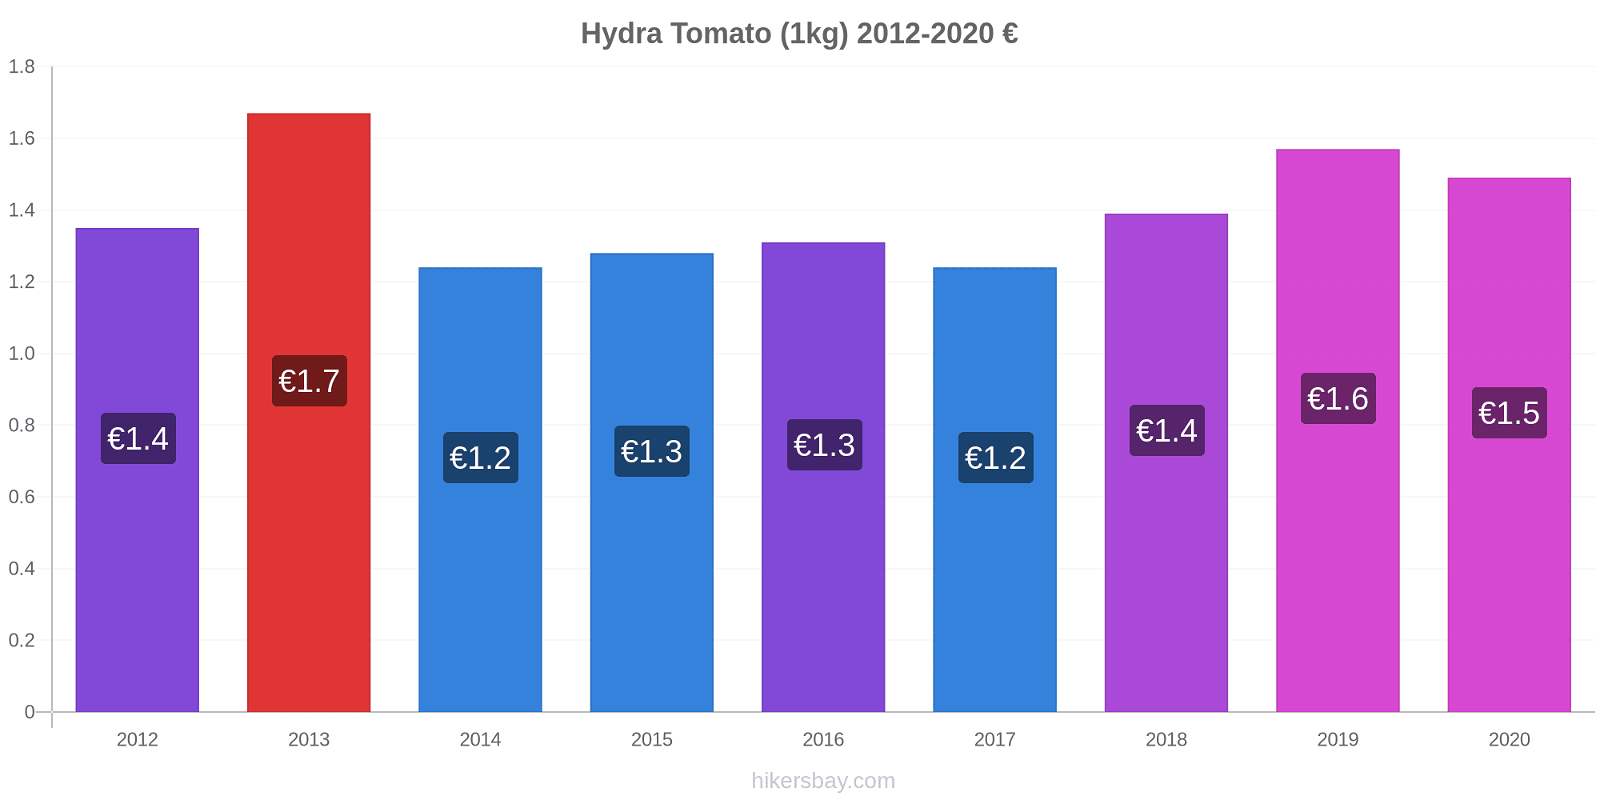 Hydra price changes Tomato (1kg) hikersbay.com